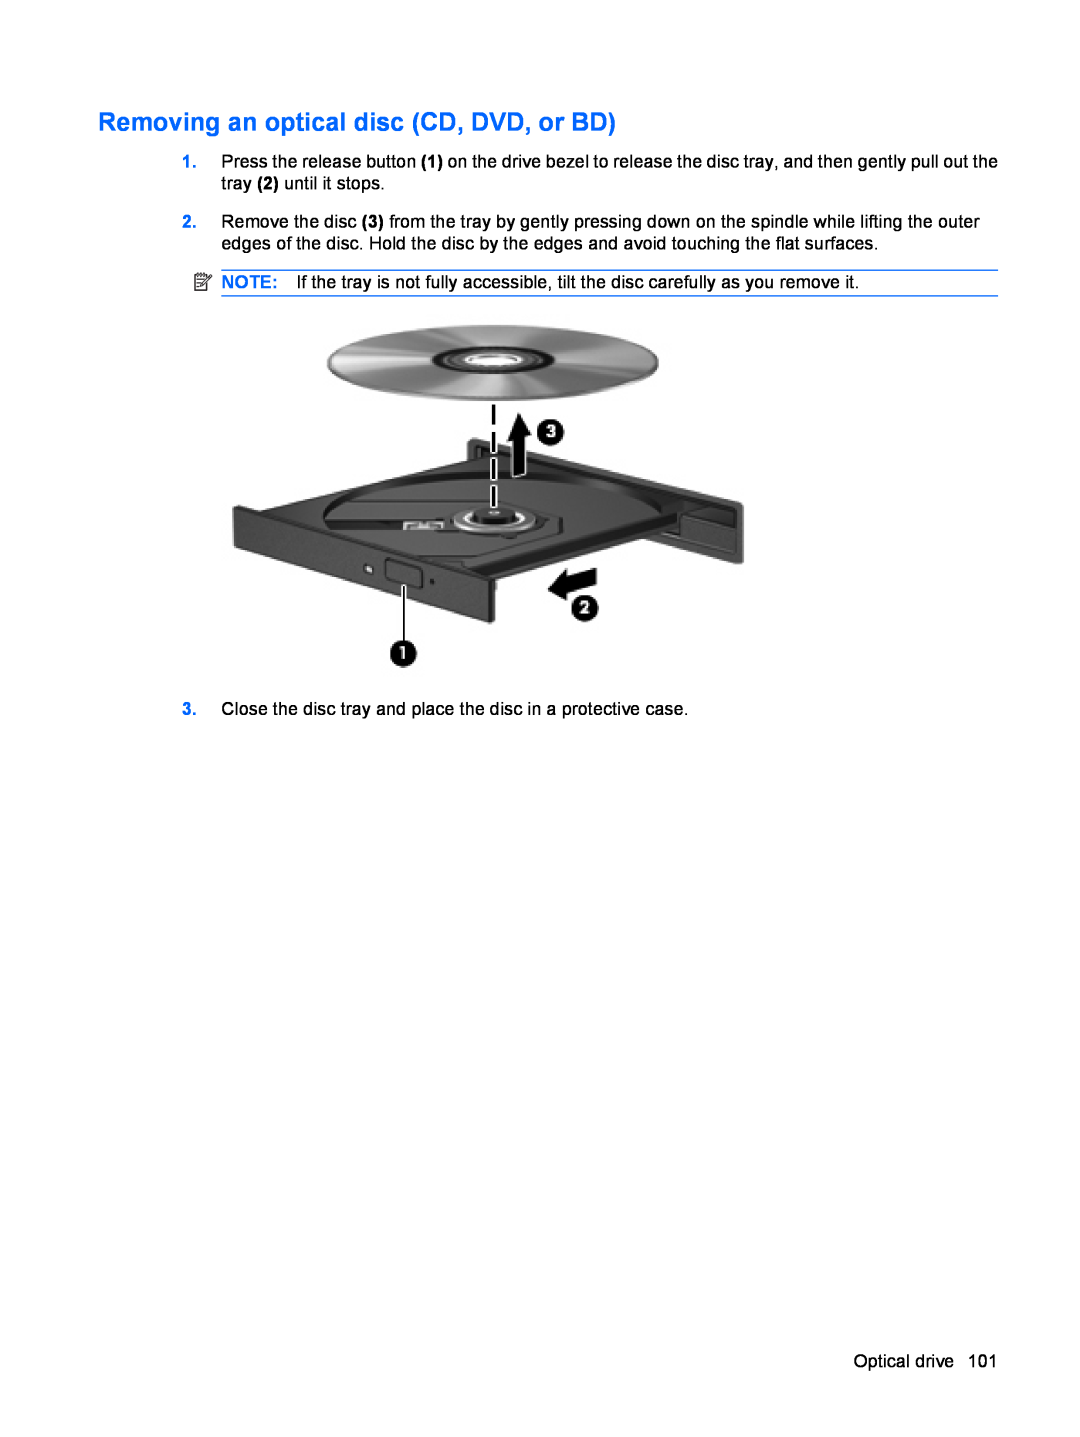 HP dv4-2160us manual Removing an optical disc CD, DVD, or BD 